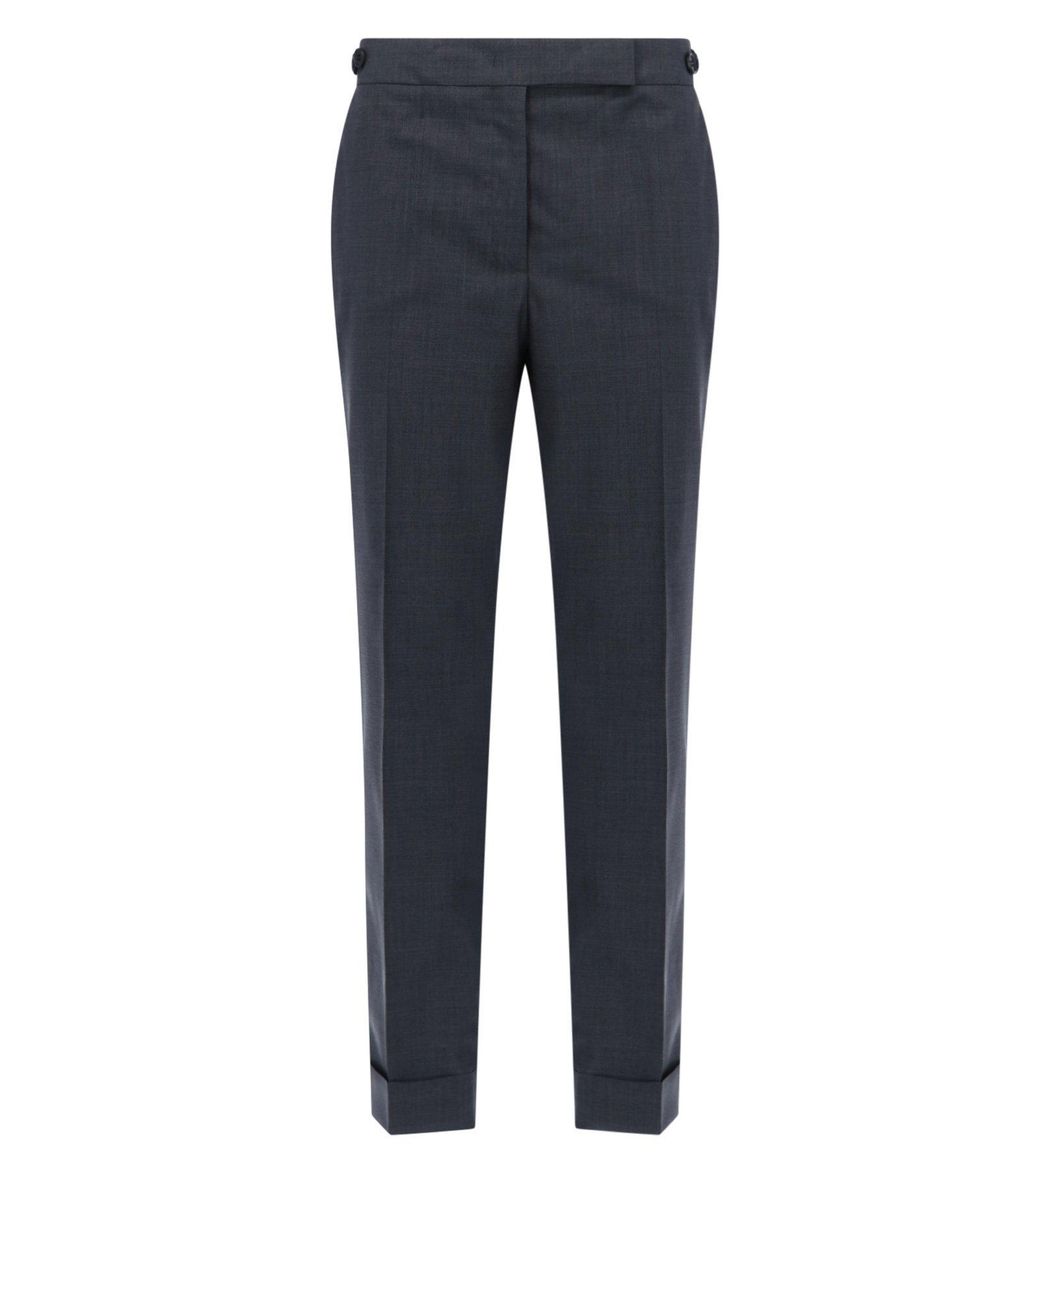 Prada Wool Slim Fit Trousers in Grey (Gray) - Lyst